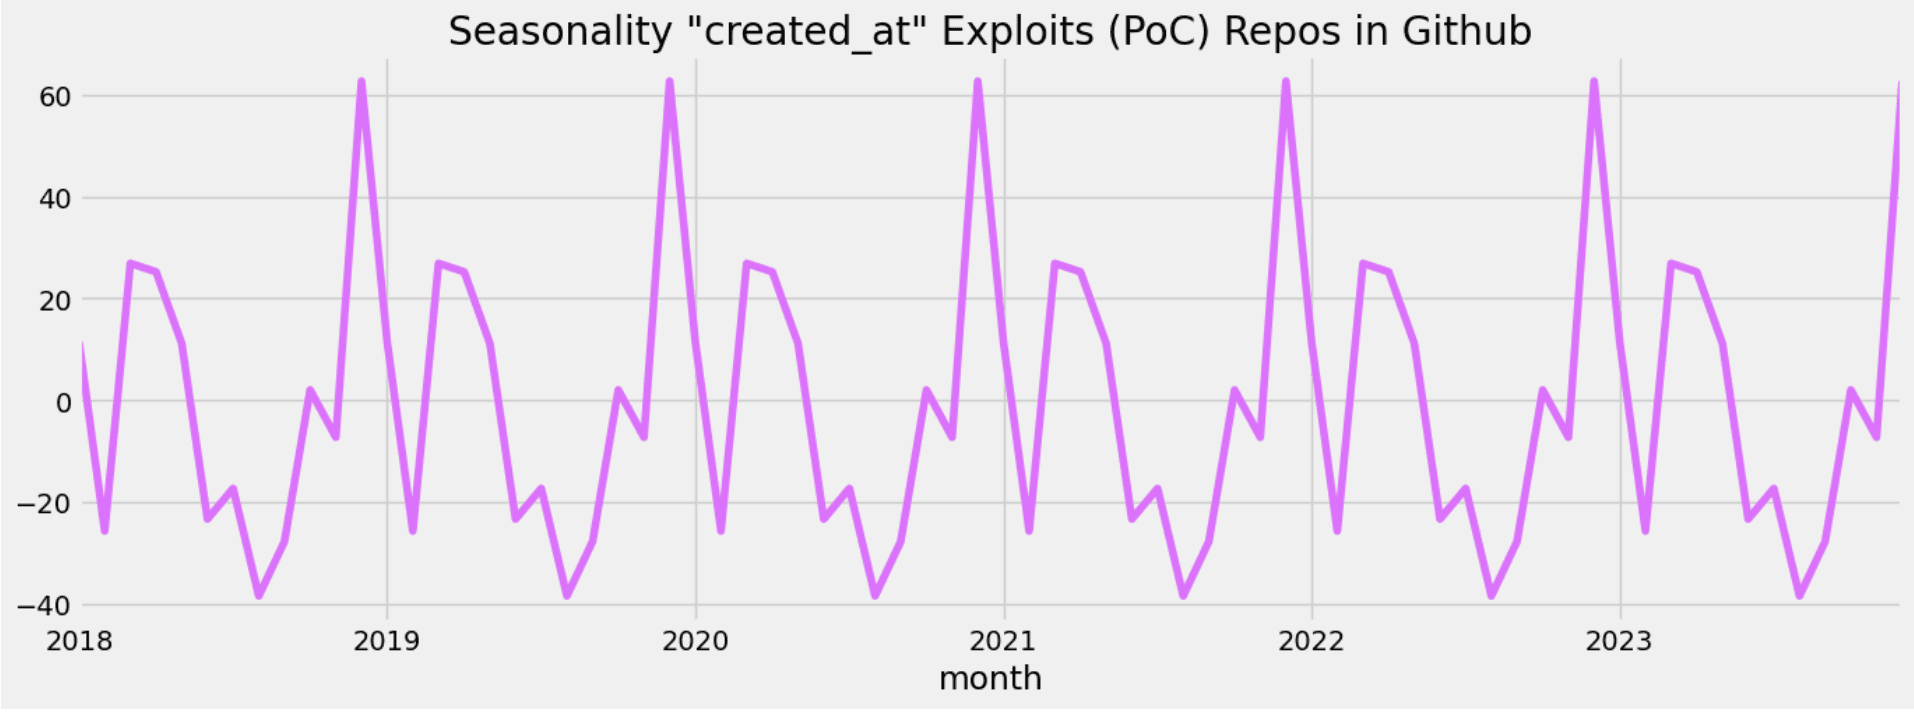 Shows the GitHub Exploit PoC Repos Seasonality